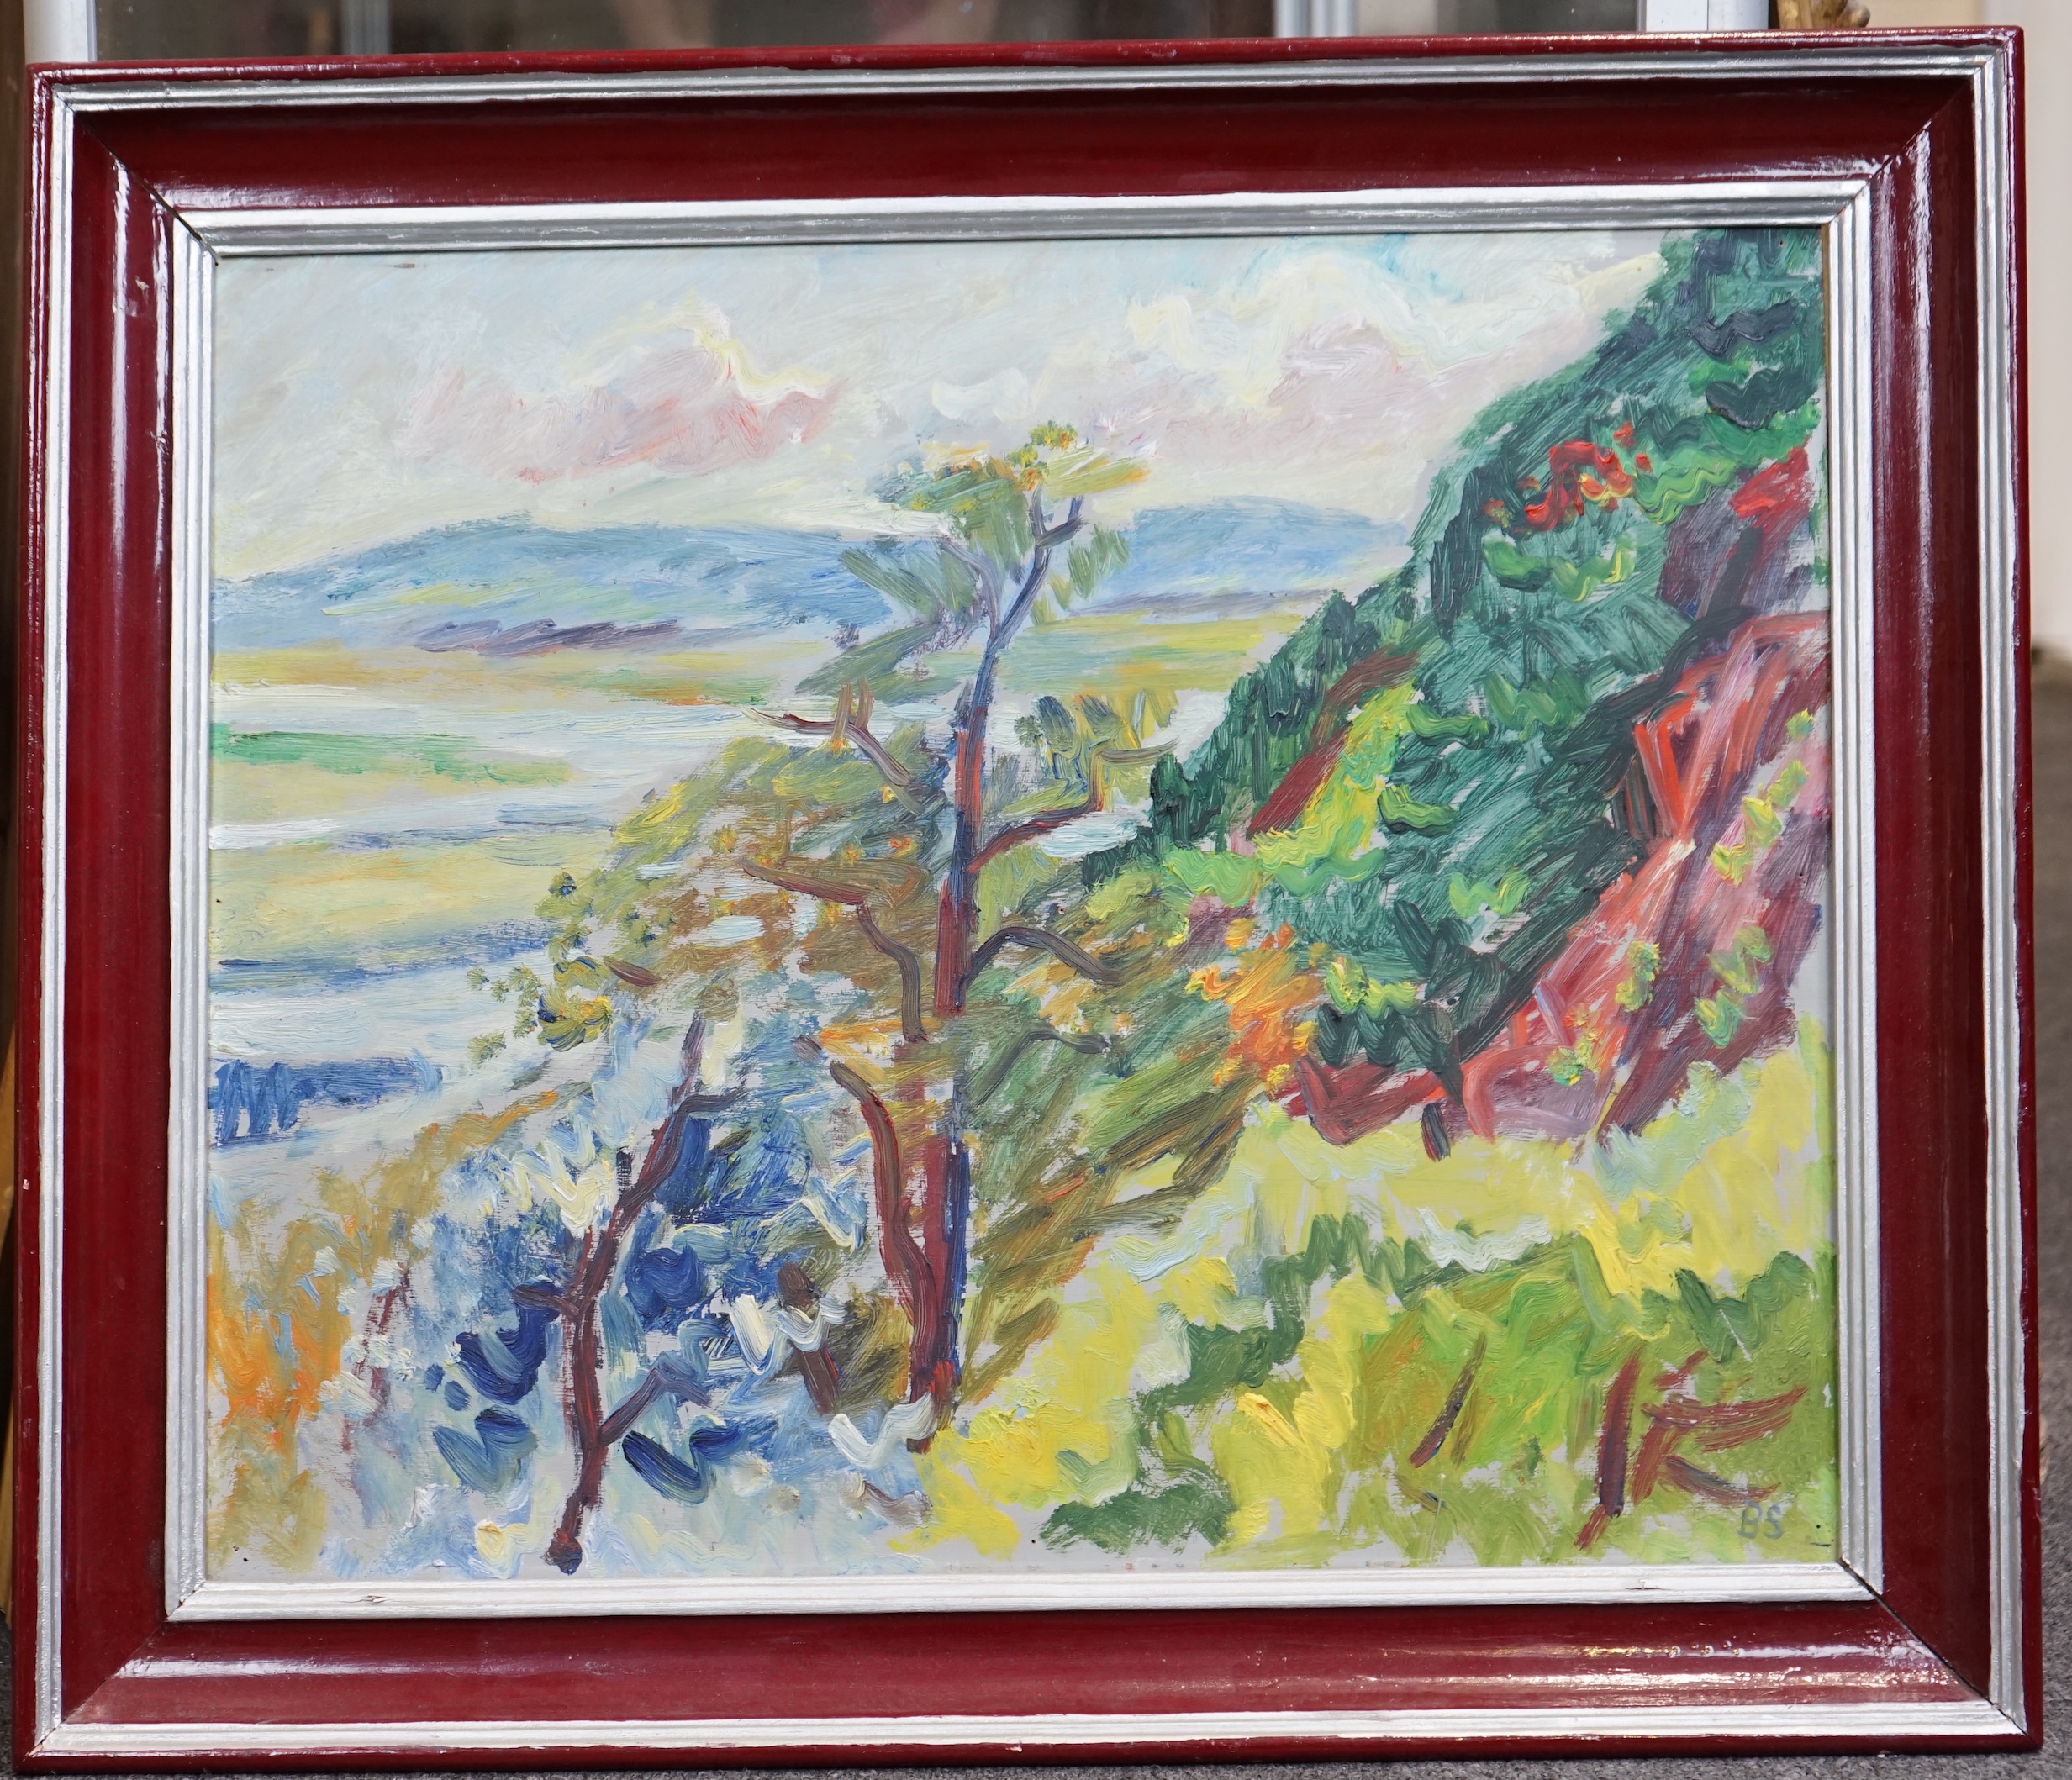 Birger Simonsson (Swedish, 1883-1938), Landscape, oil on board, 45 x 55cm